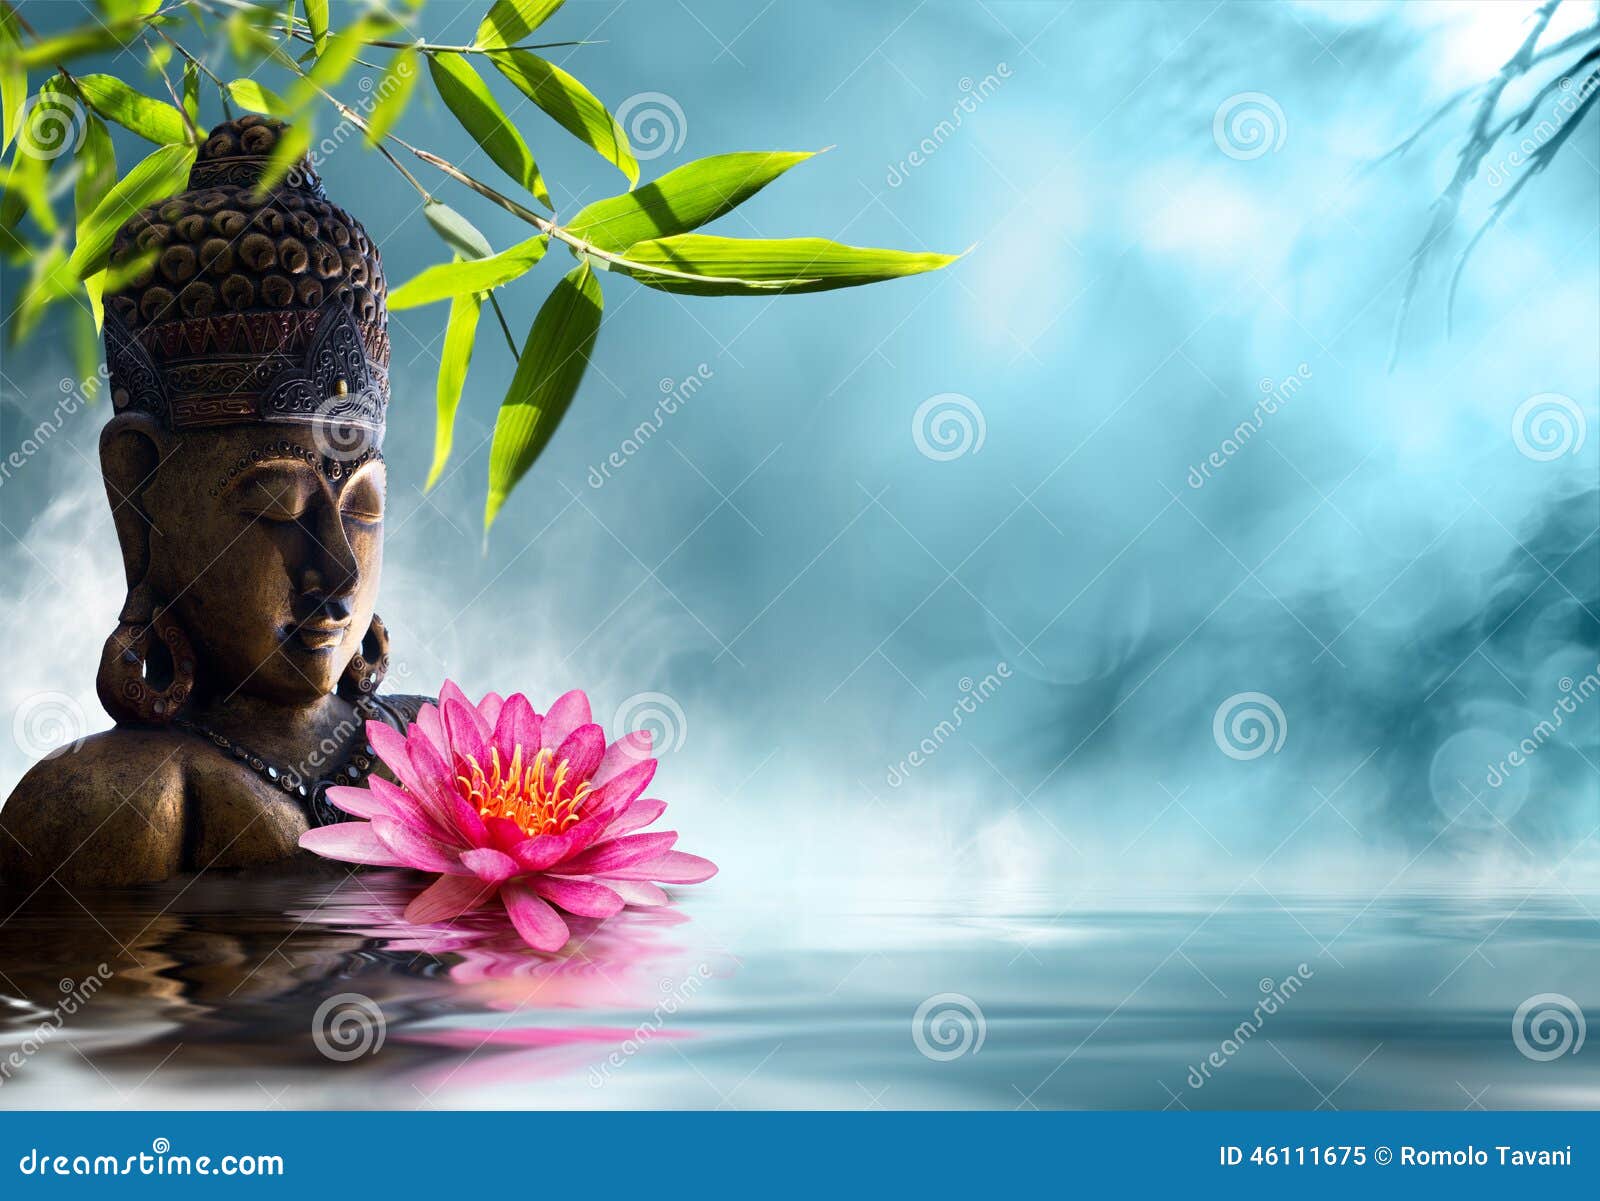 buddha hd wallpaper 1080p  Bouddha Bouddha jardin Image zen